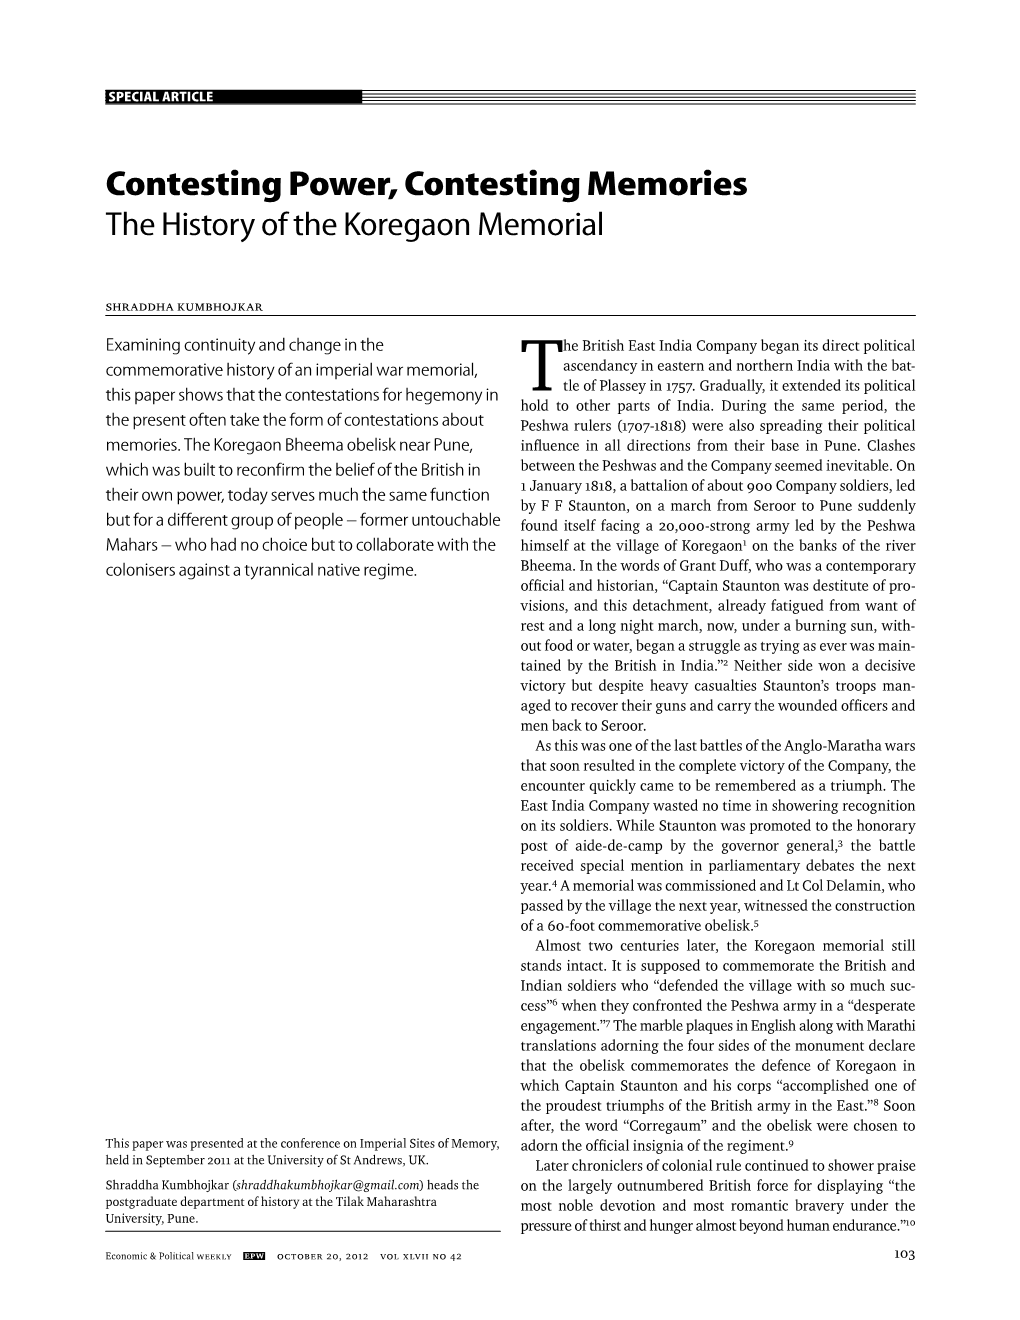 Contesting Power, Contesting Memories the History of the Koregaon Memorial